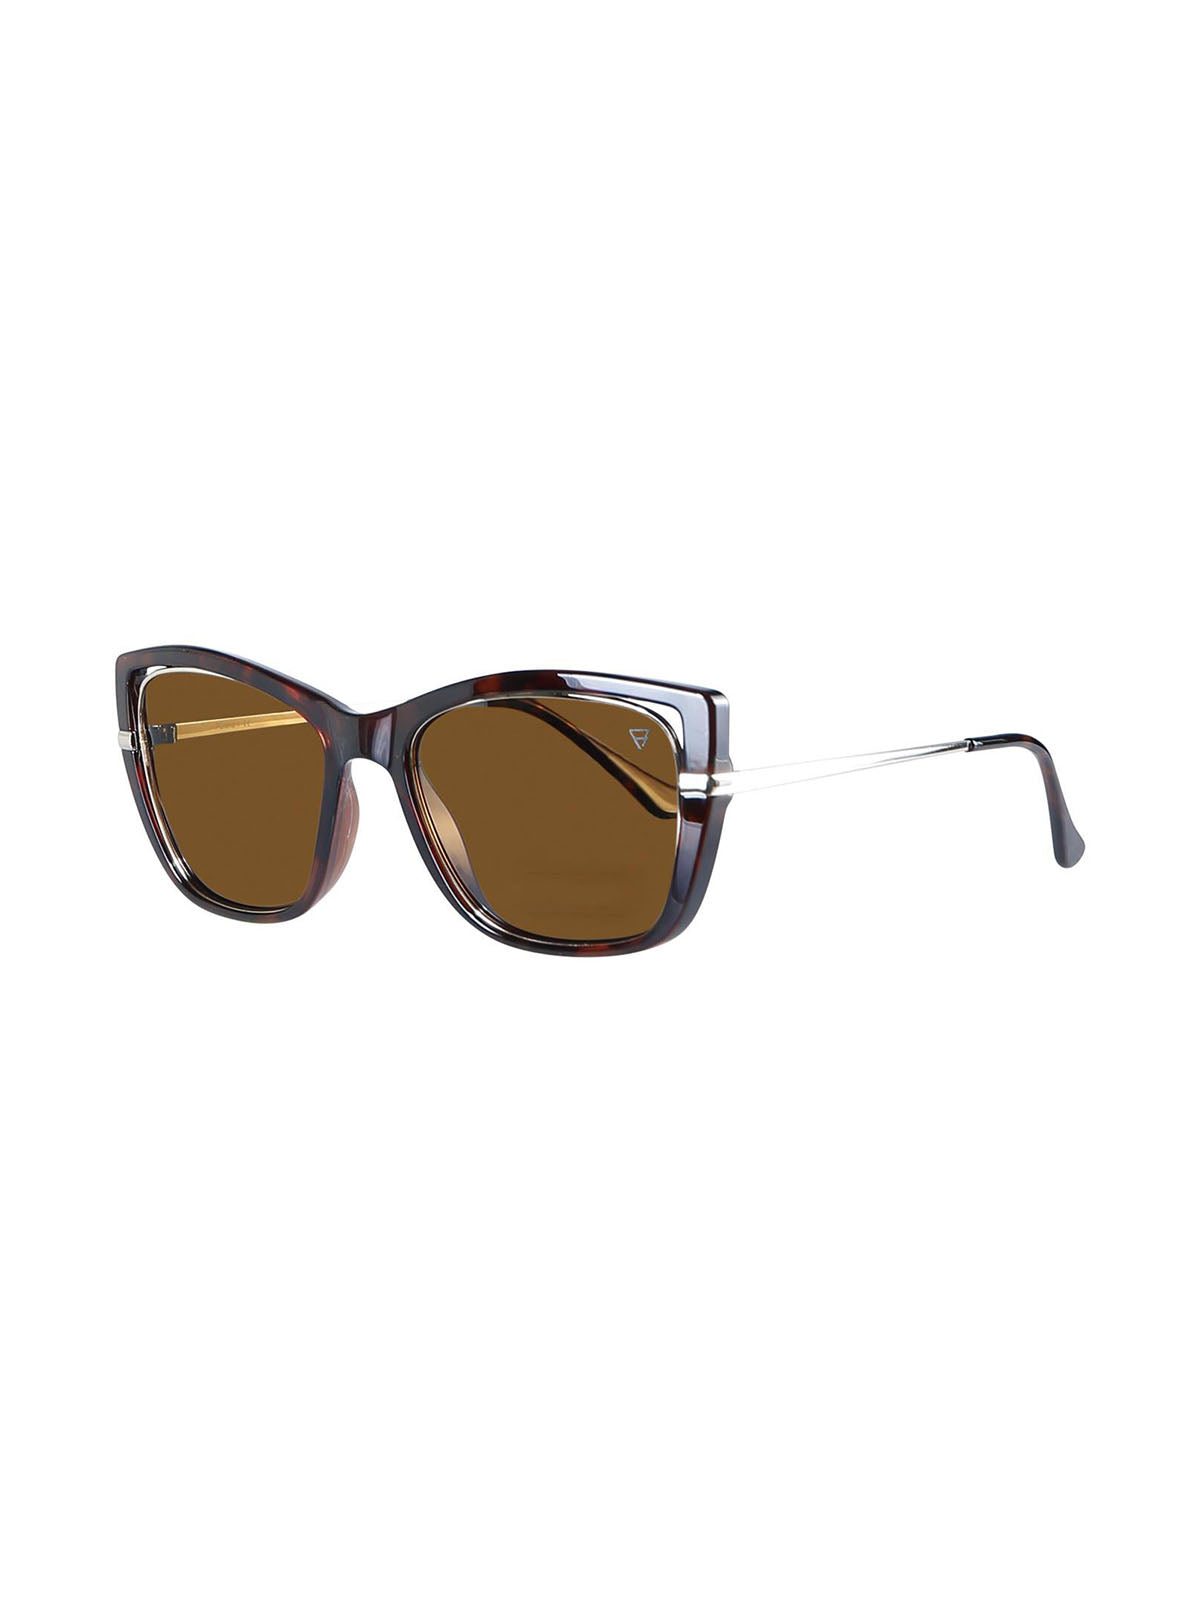 Parana 1 Sunglasses | Brown